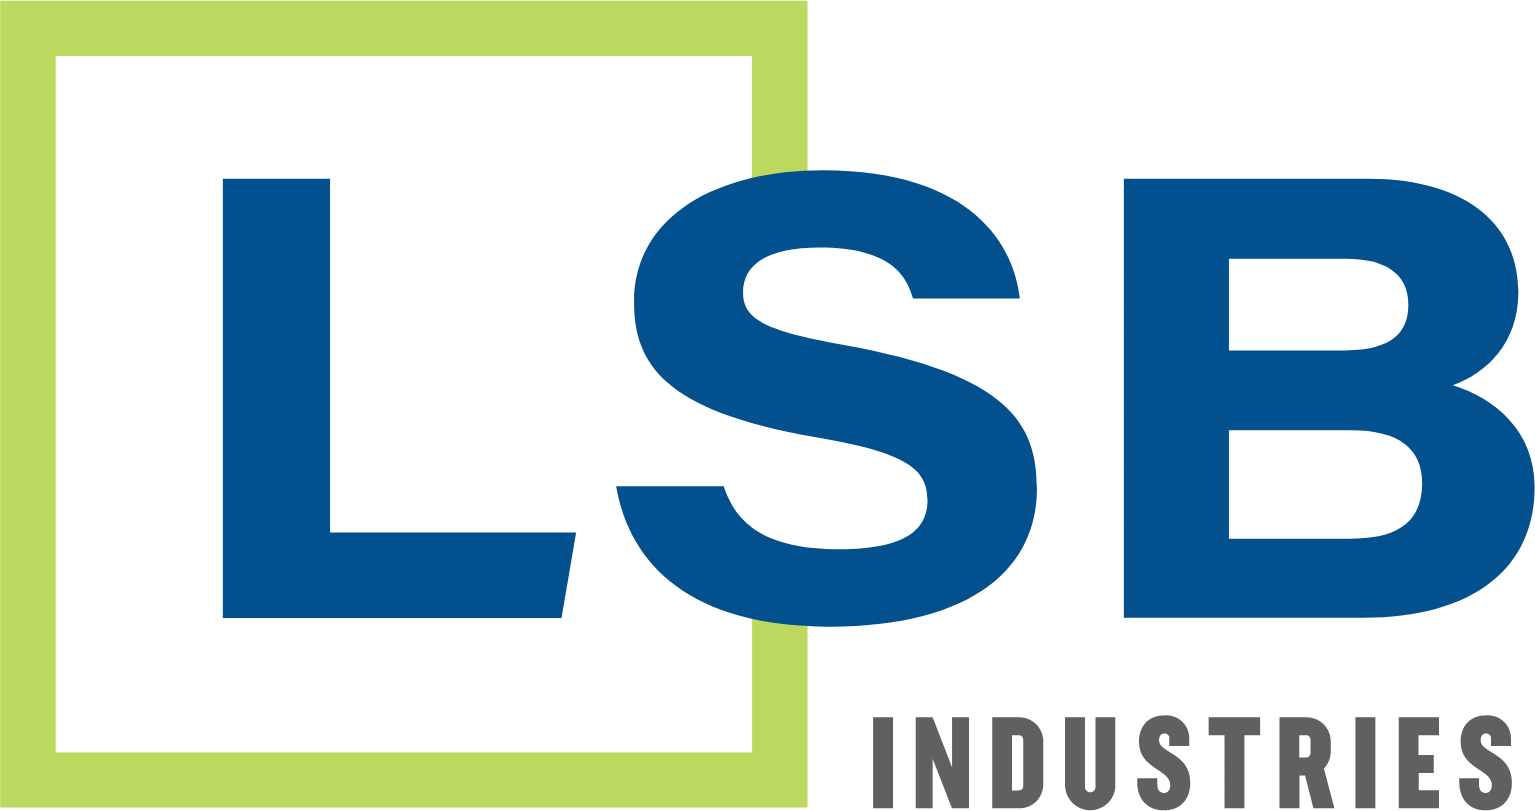 LSB Industries logo large (transparent PNG)